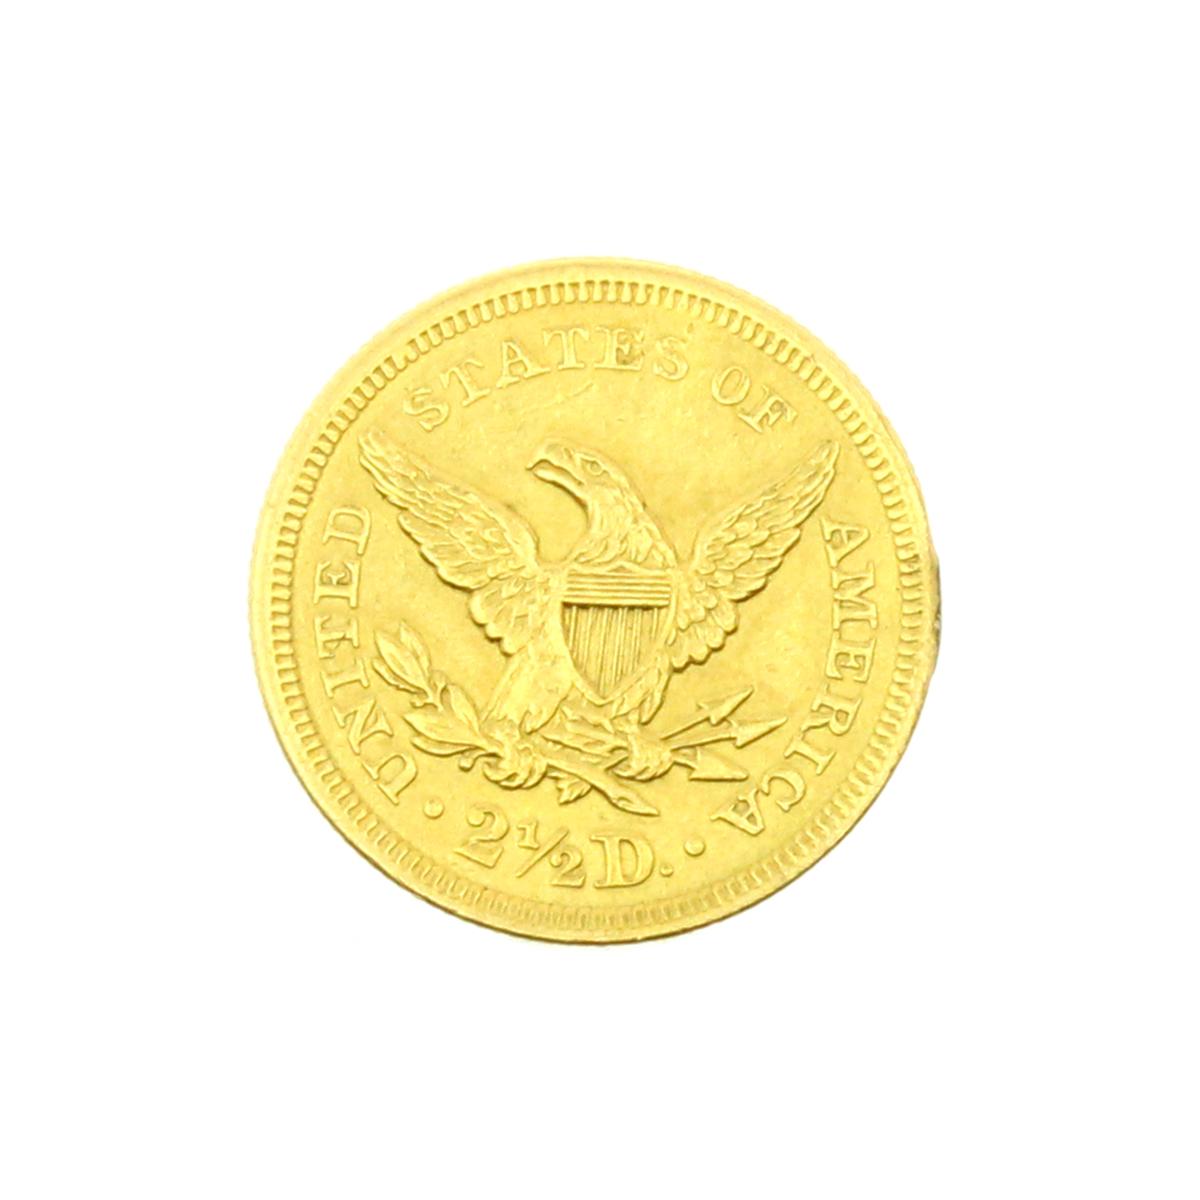 Rare 1856 $2.50 U.S. Liberty Head Gold Coin